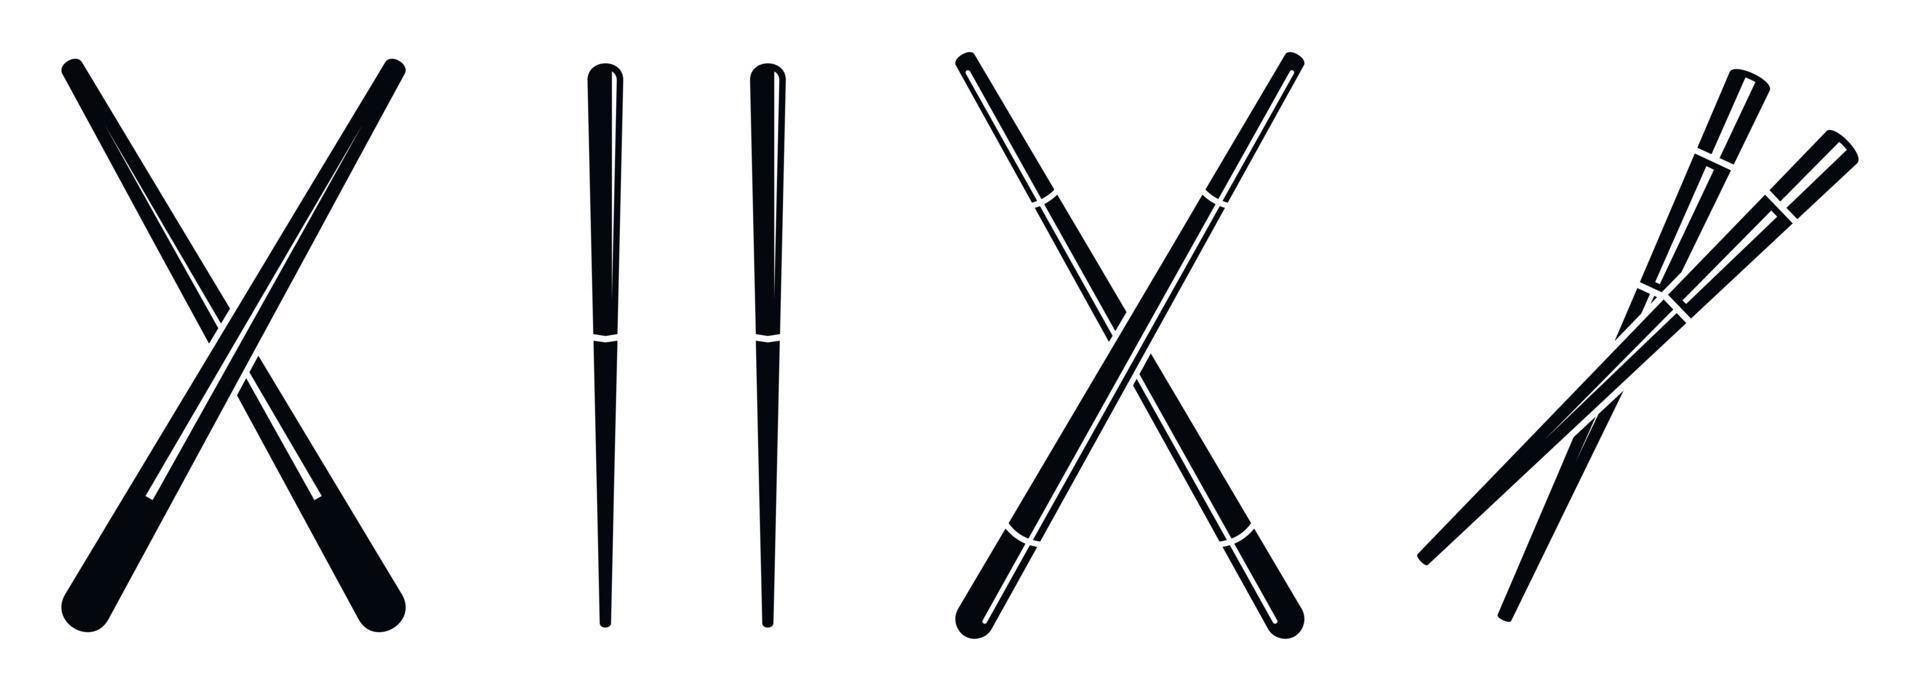 Japanese chopsticks icons set, simple style vector